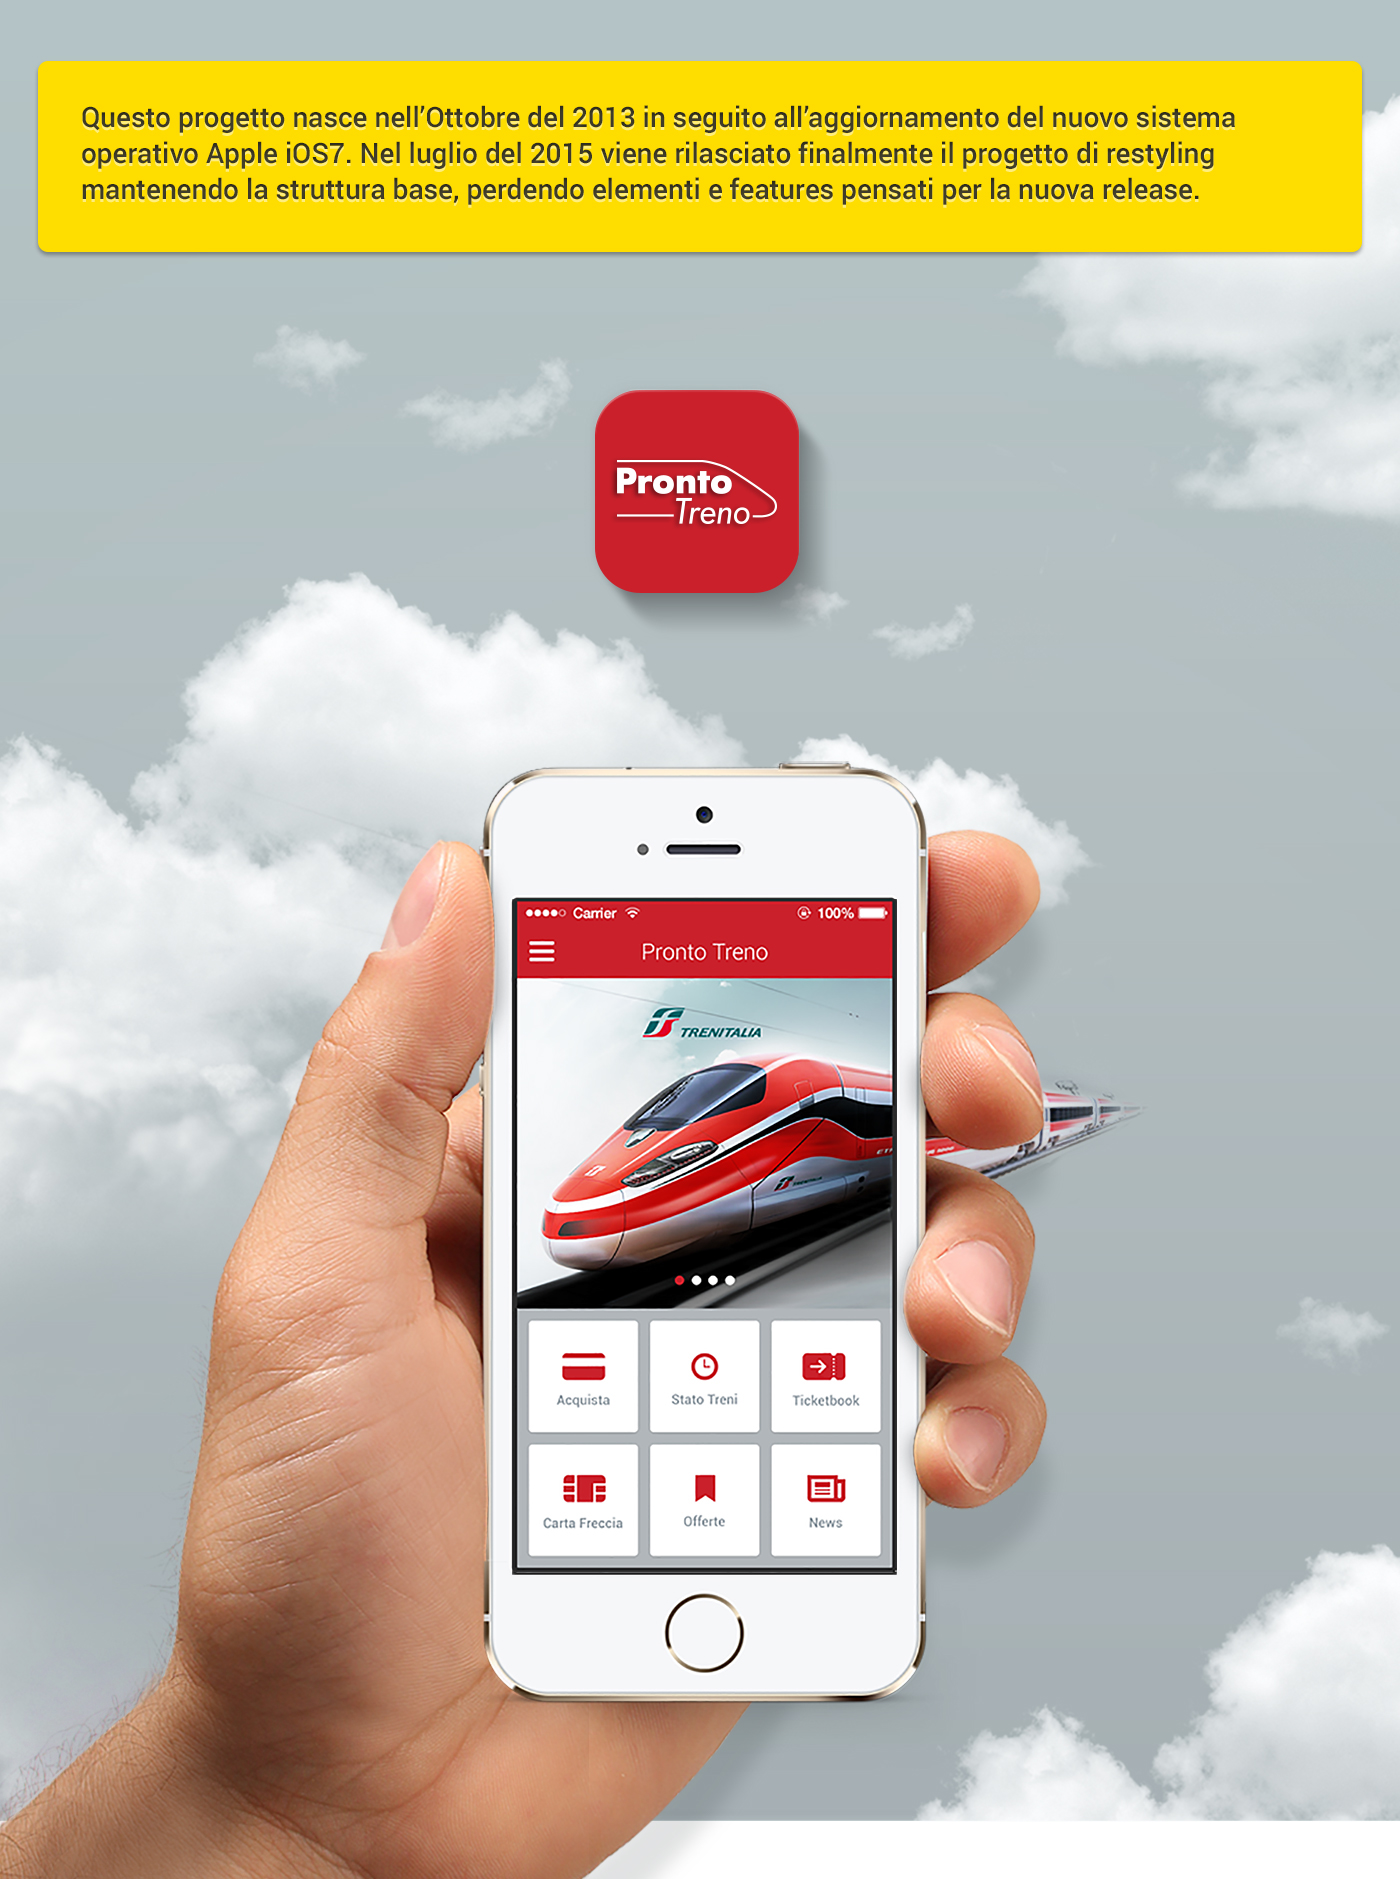 Trenitalia Prontotreno Pronto Treno train UI wireframe interaction design rails italian app styleguide icons treno